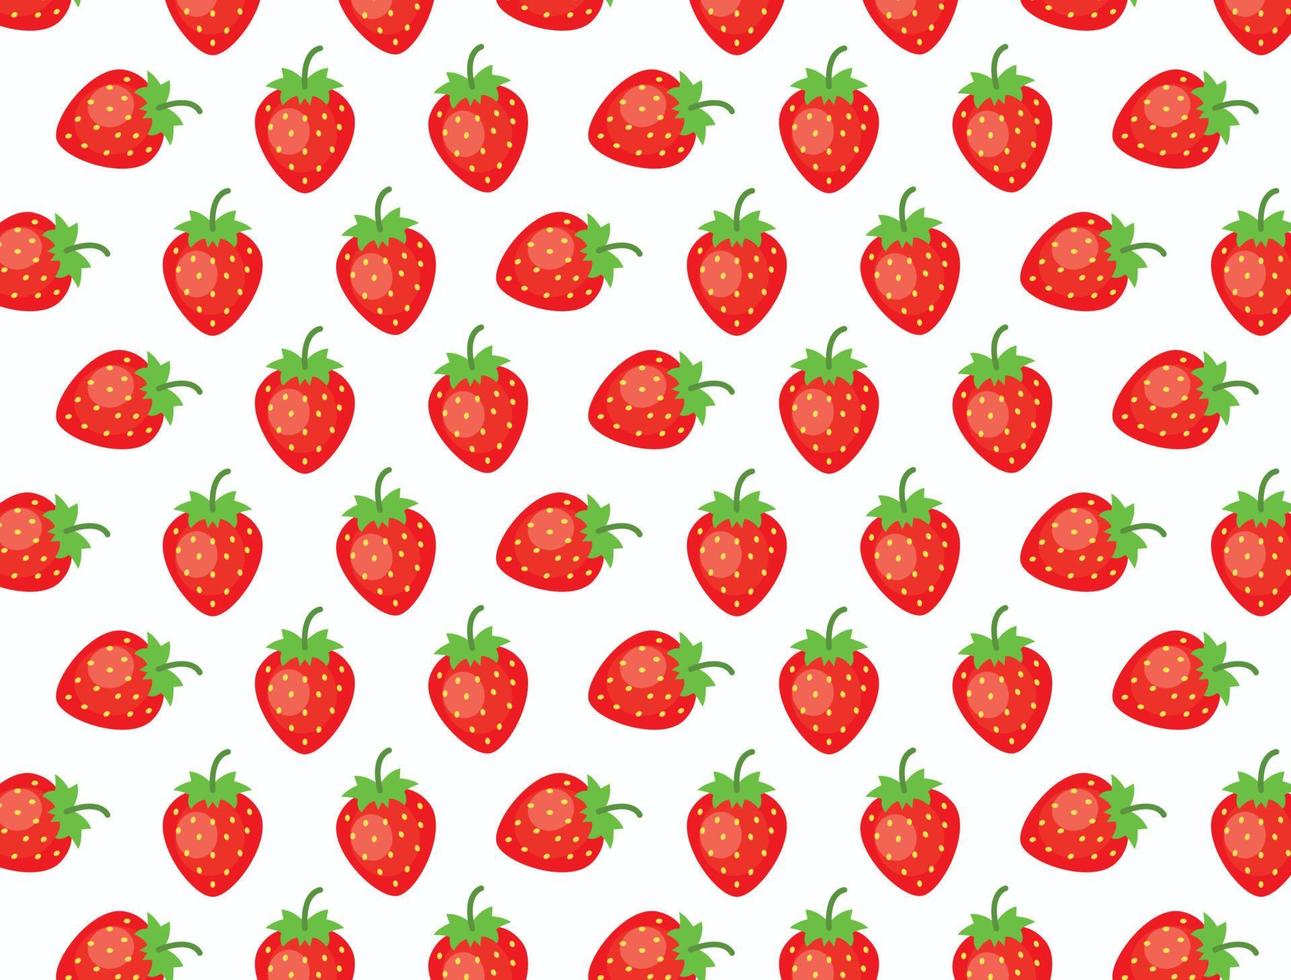 Seamless pattern of flat strawberries - vector illustration